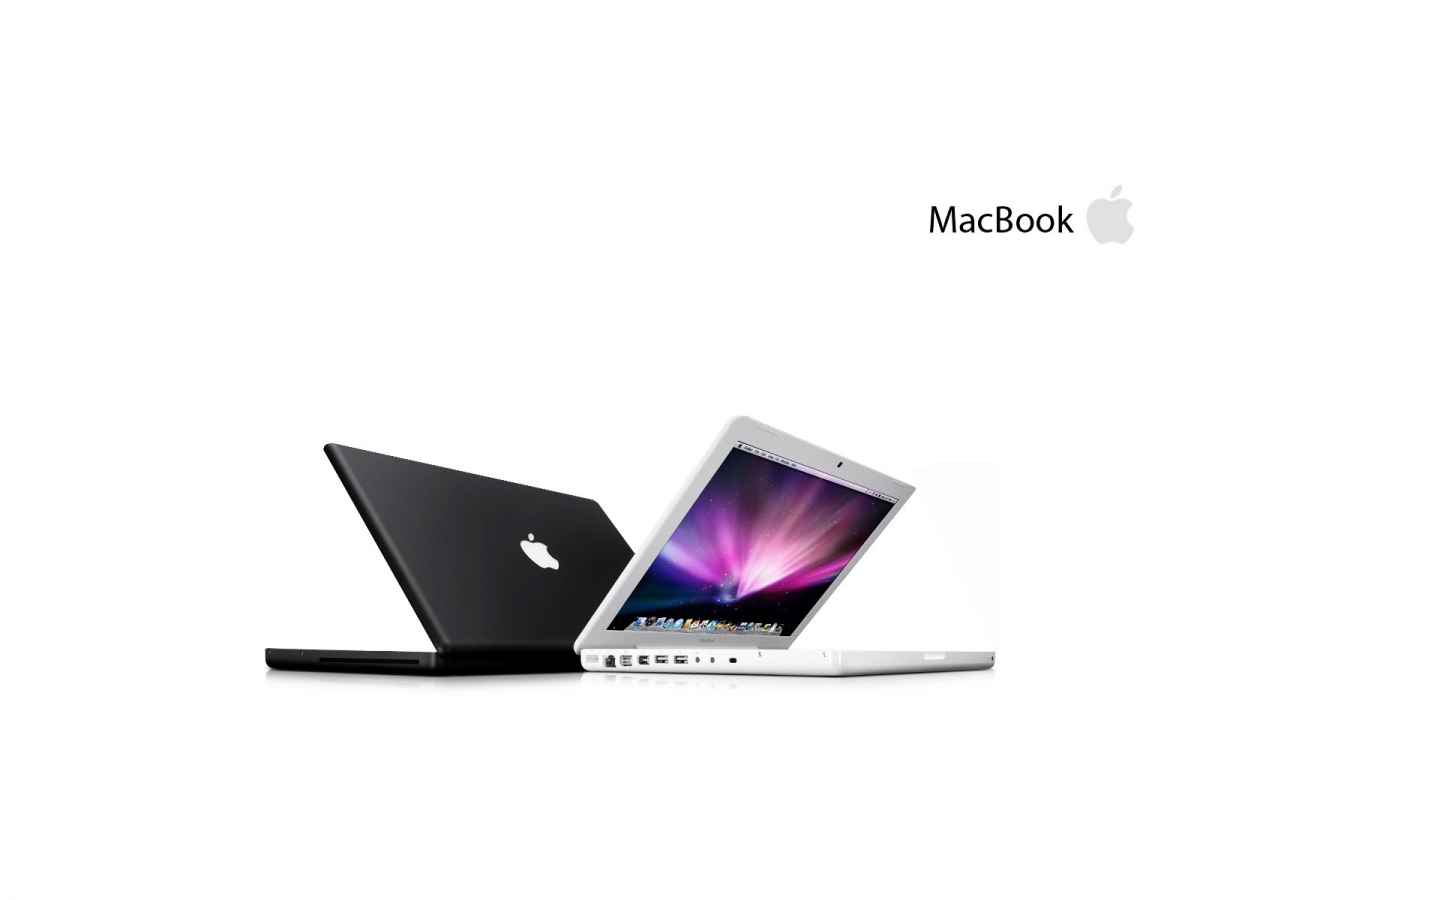 Apple MacBook for 1440 x 900 widescreen resolution